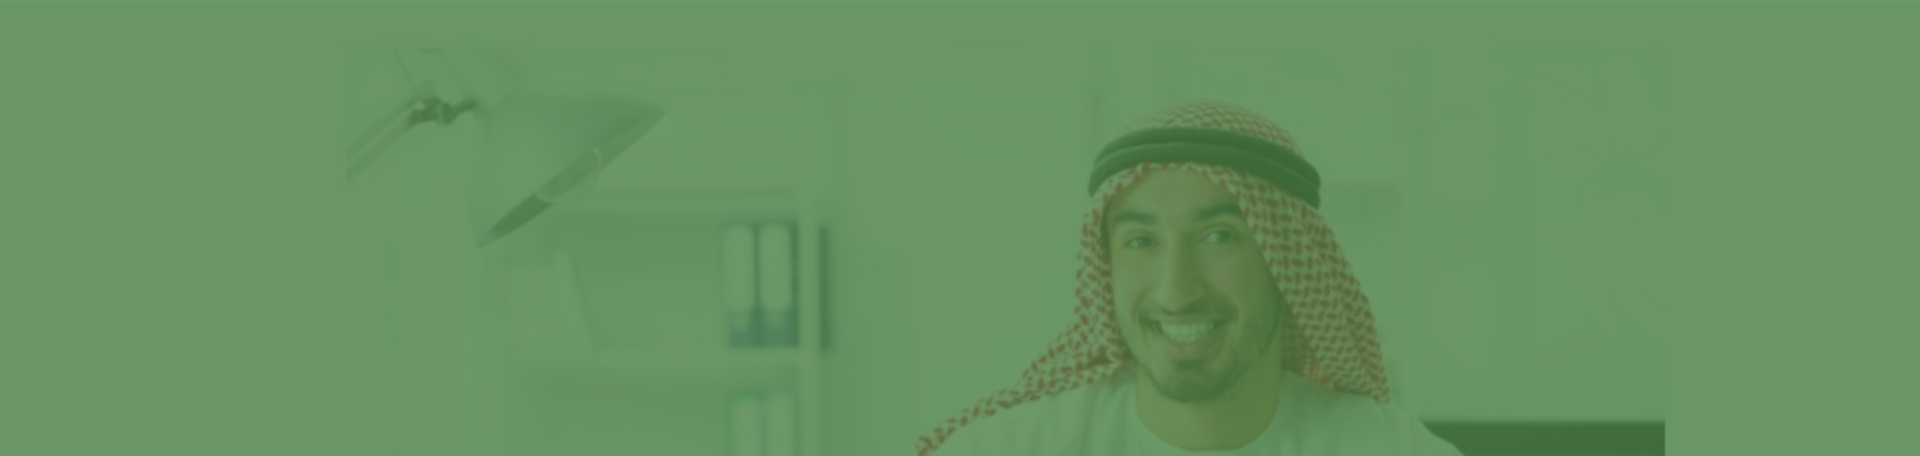 Benefits of Getting Tax Residency Certificate or Tax Domicile Certificate in UAE